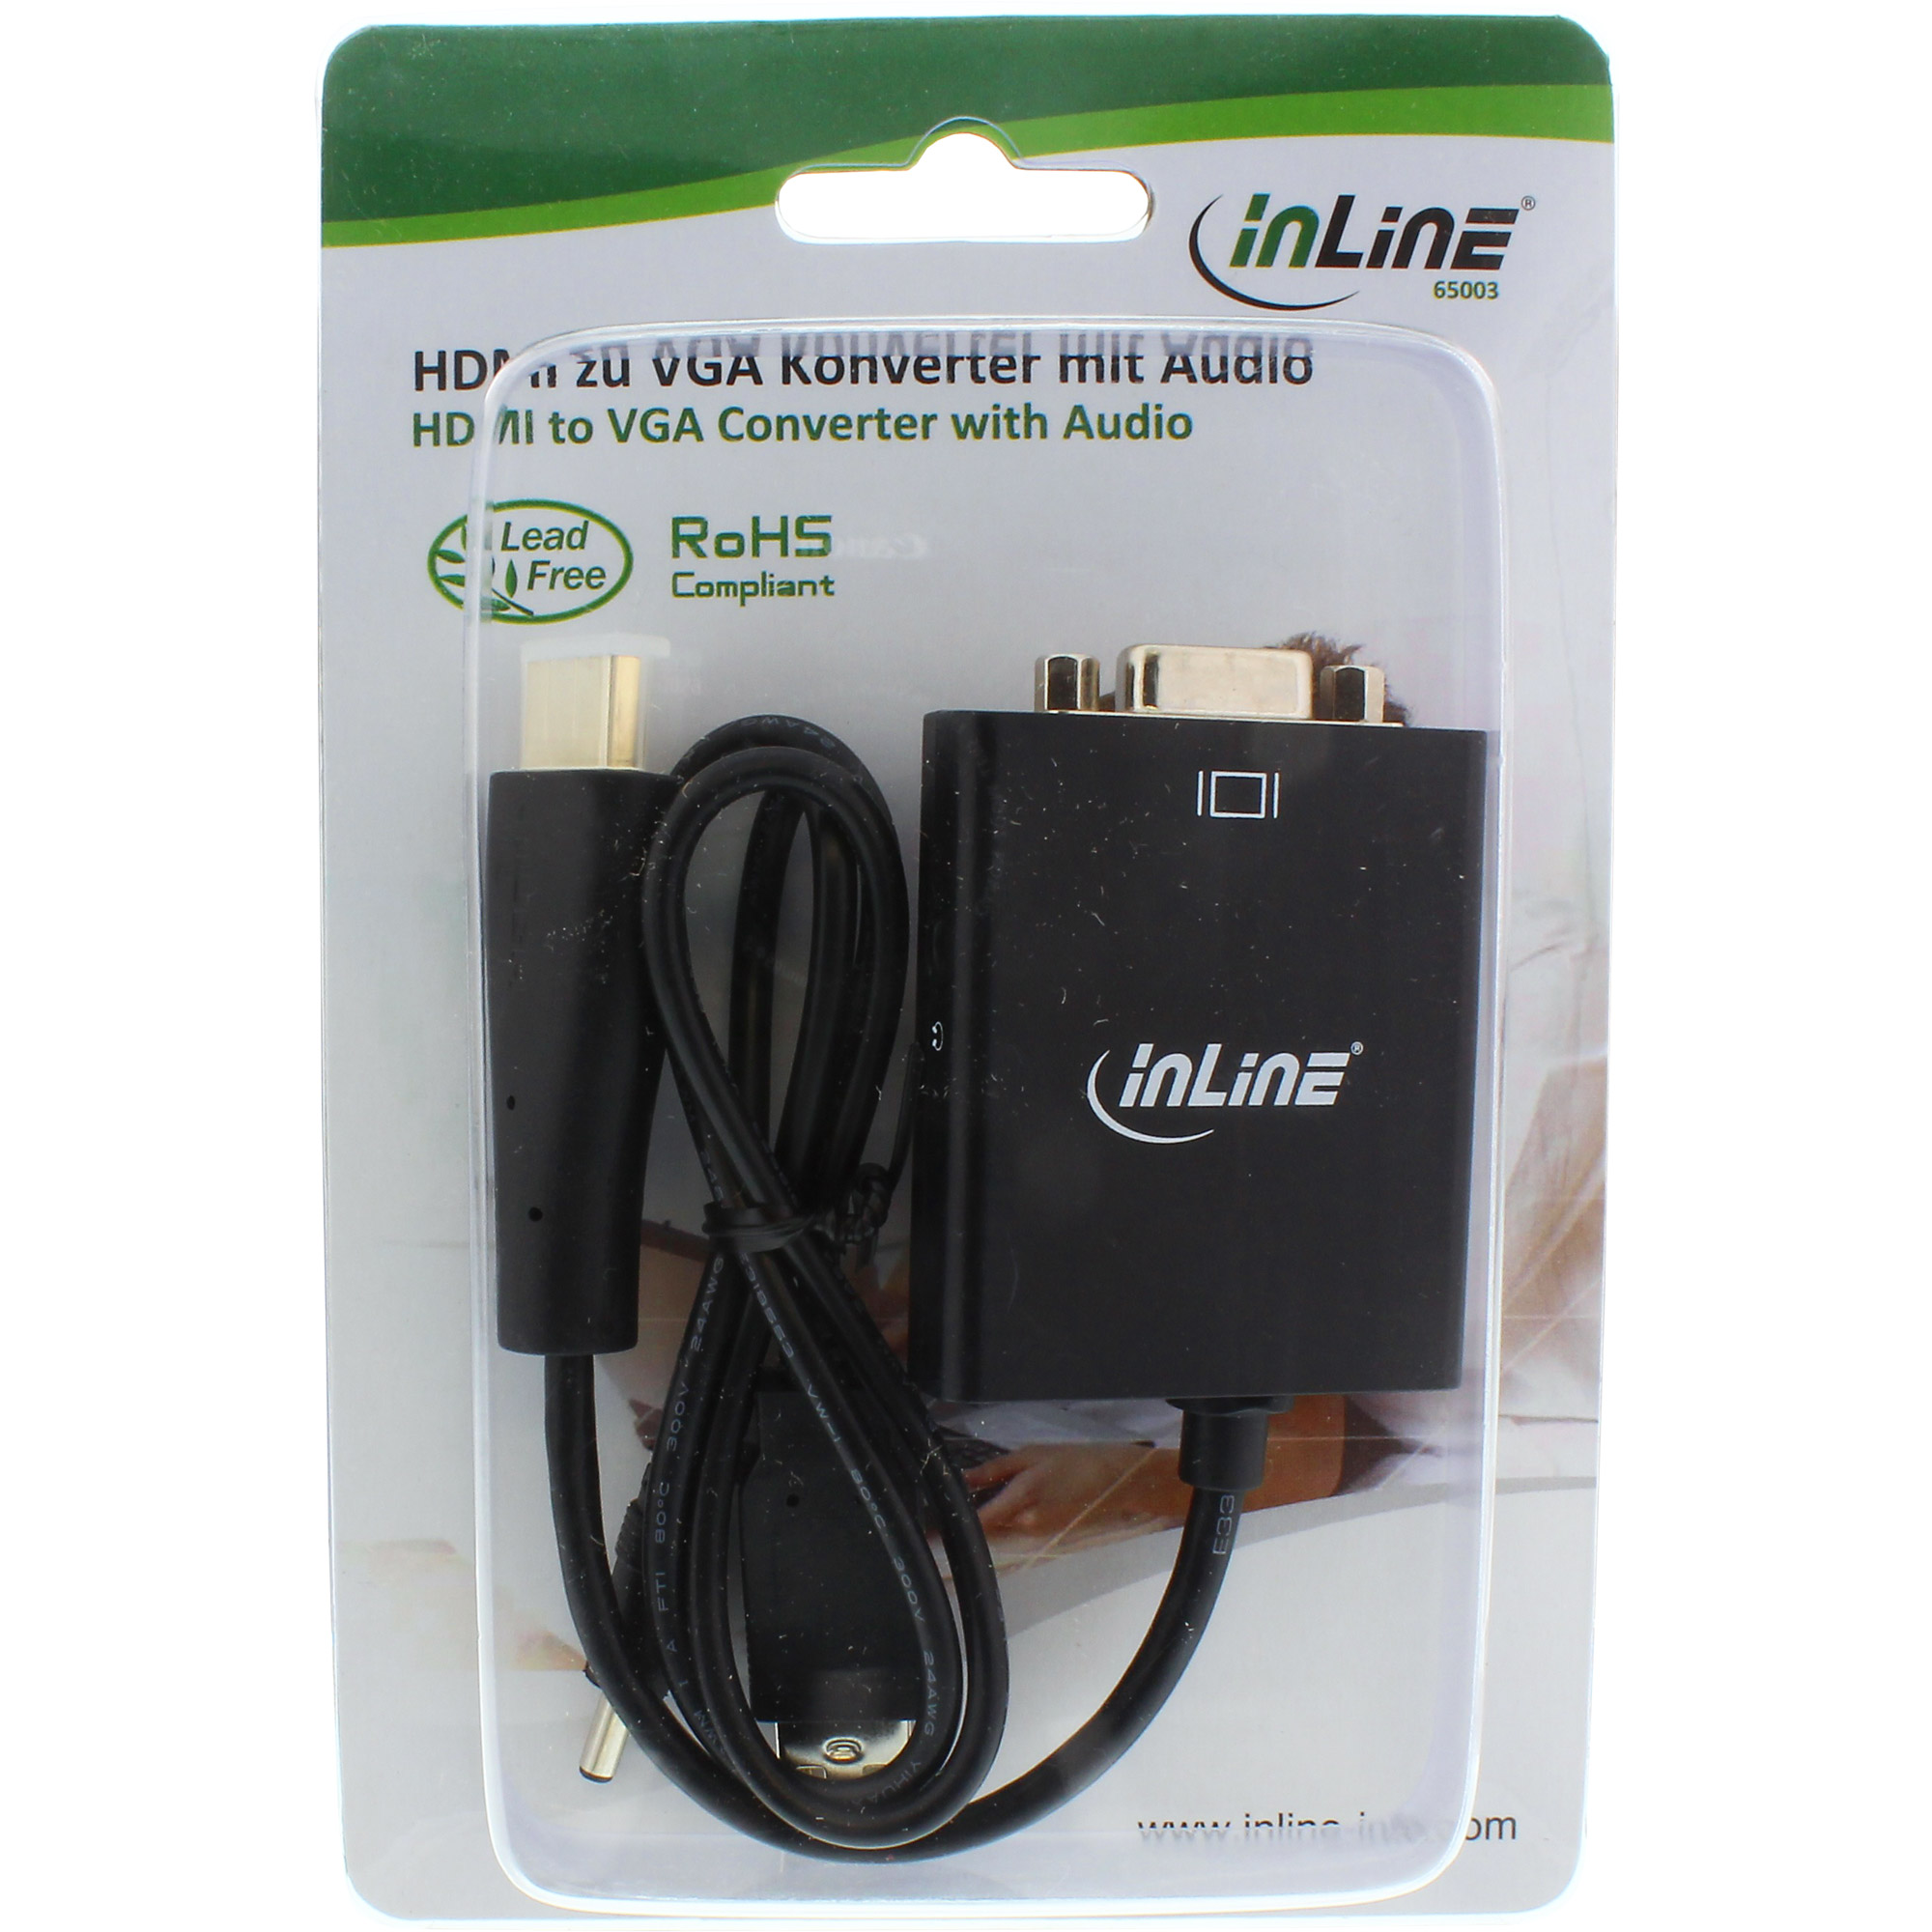 InLine® Dongle Konverter HDMI zu VGA, mit Audio, Eingang HDMI, Ausgang VGA und Stereo Audio